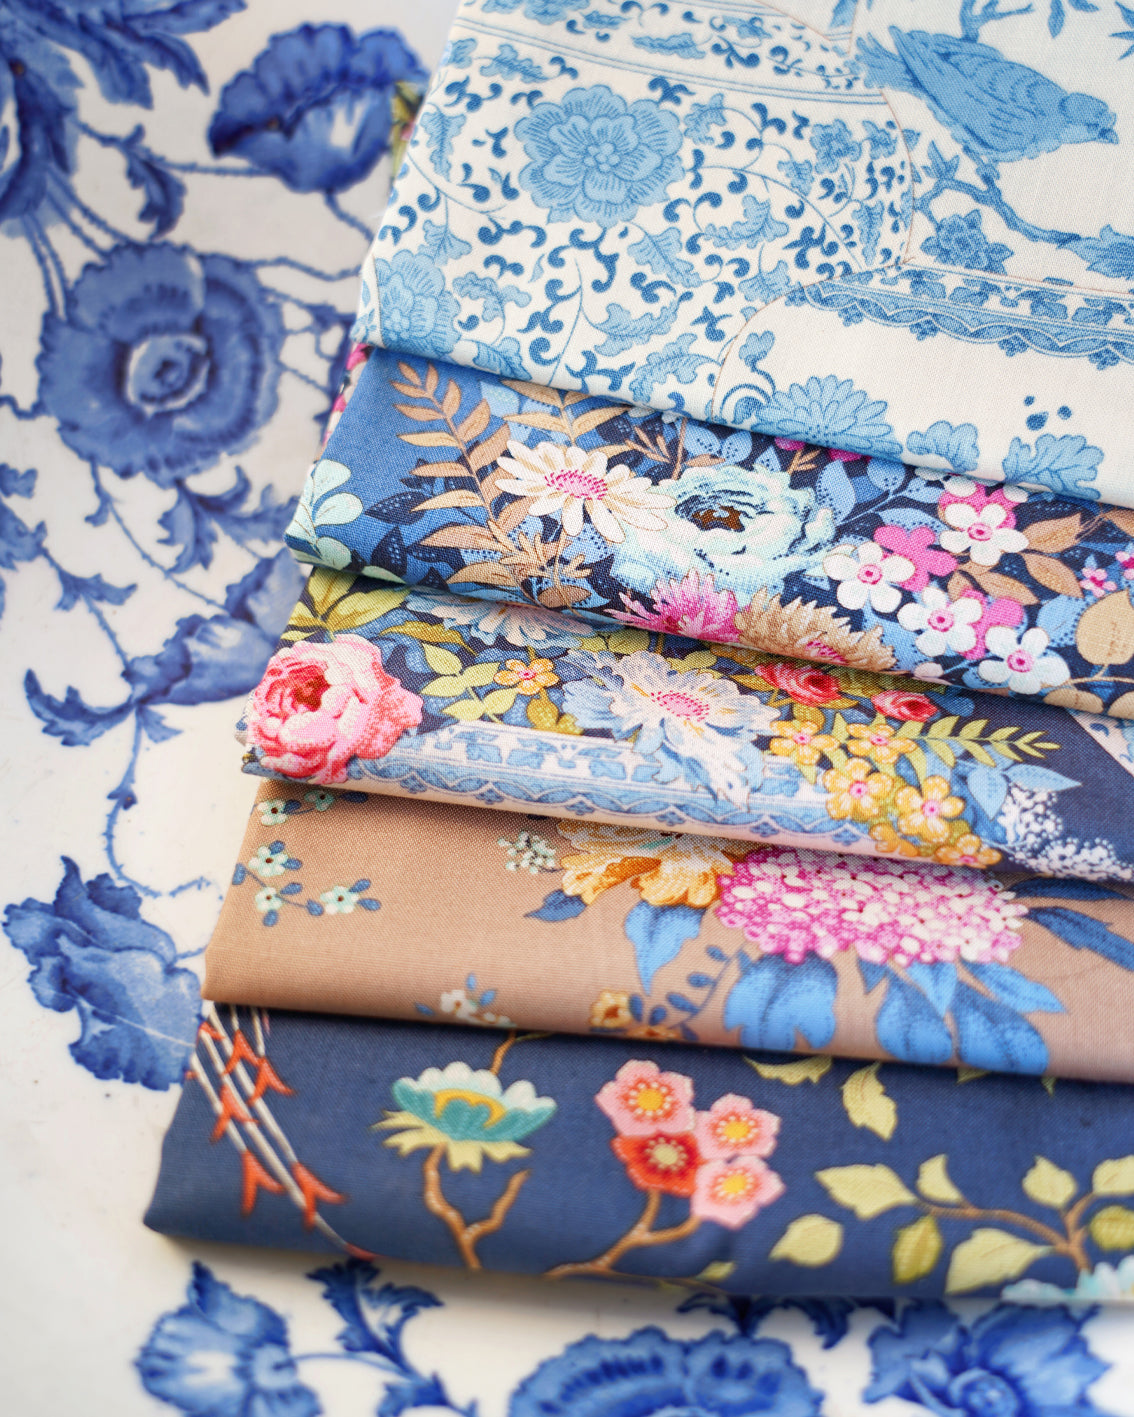 Tilda Fabrics